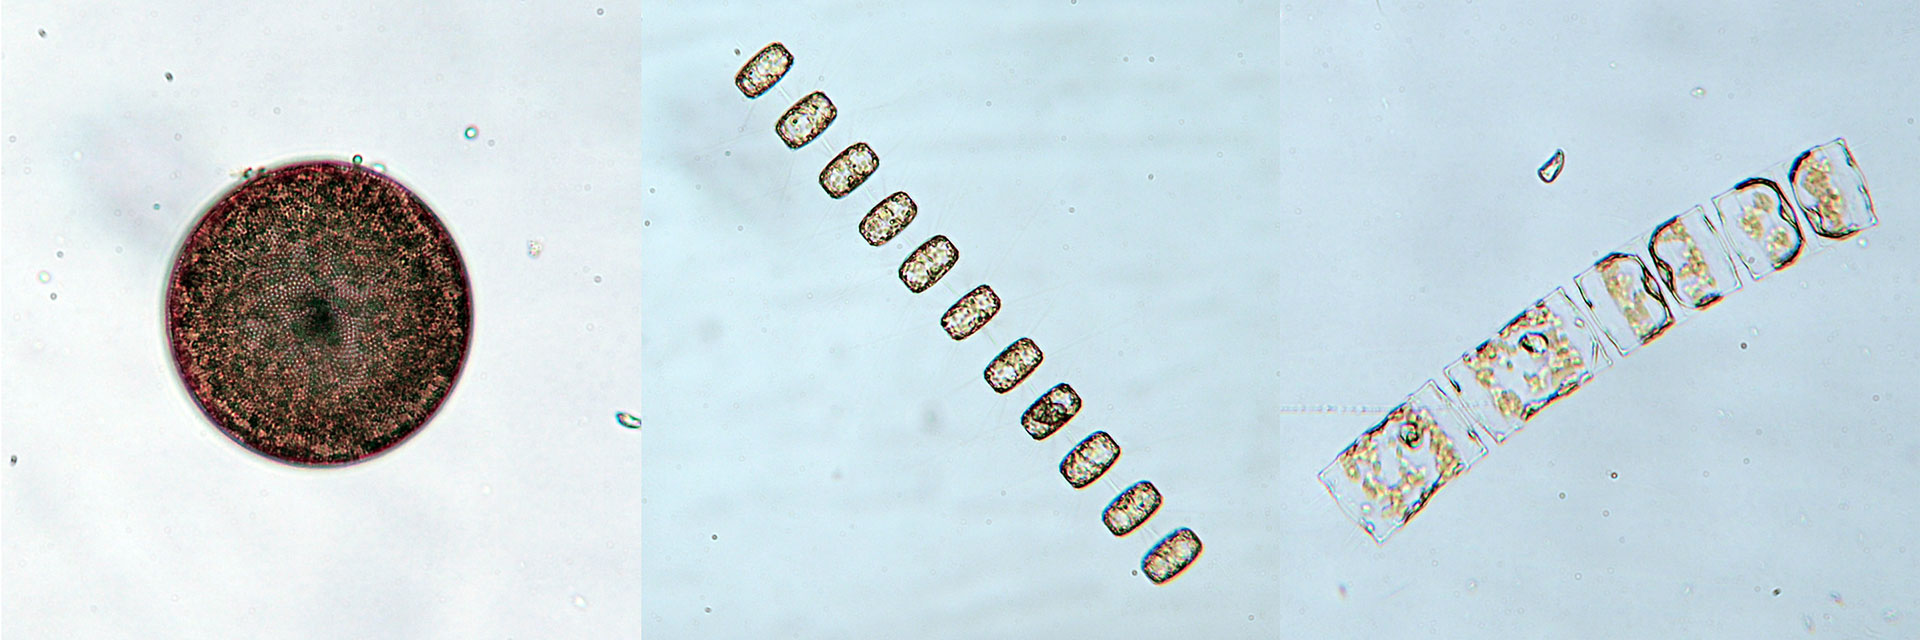 Antartic diatoms